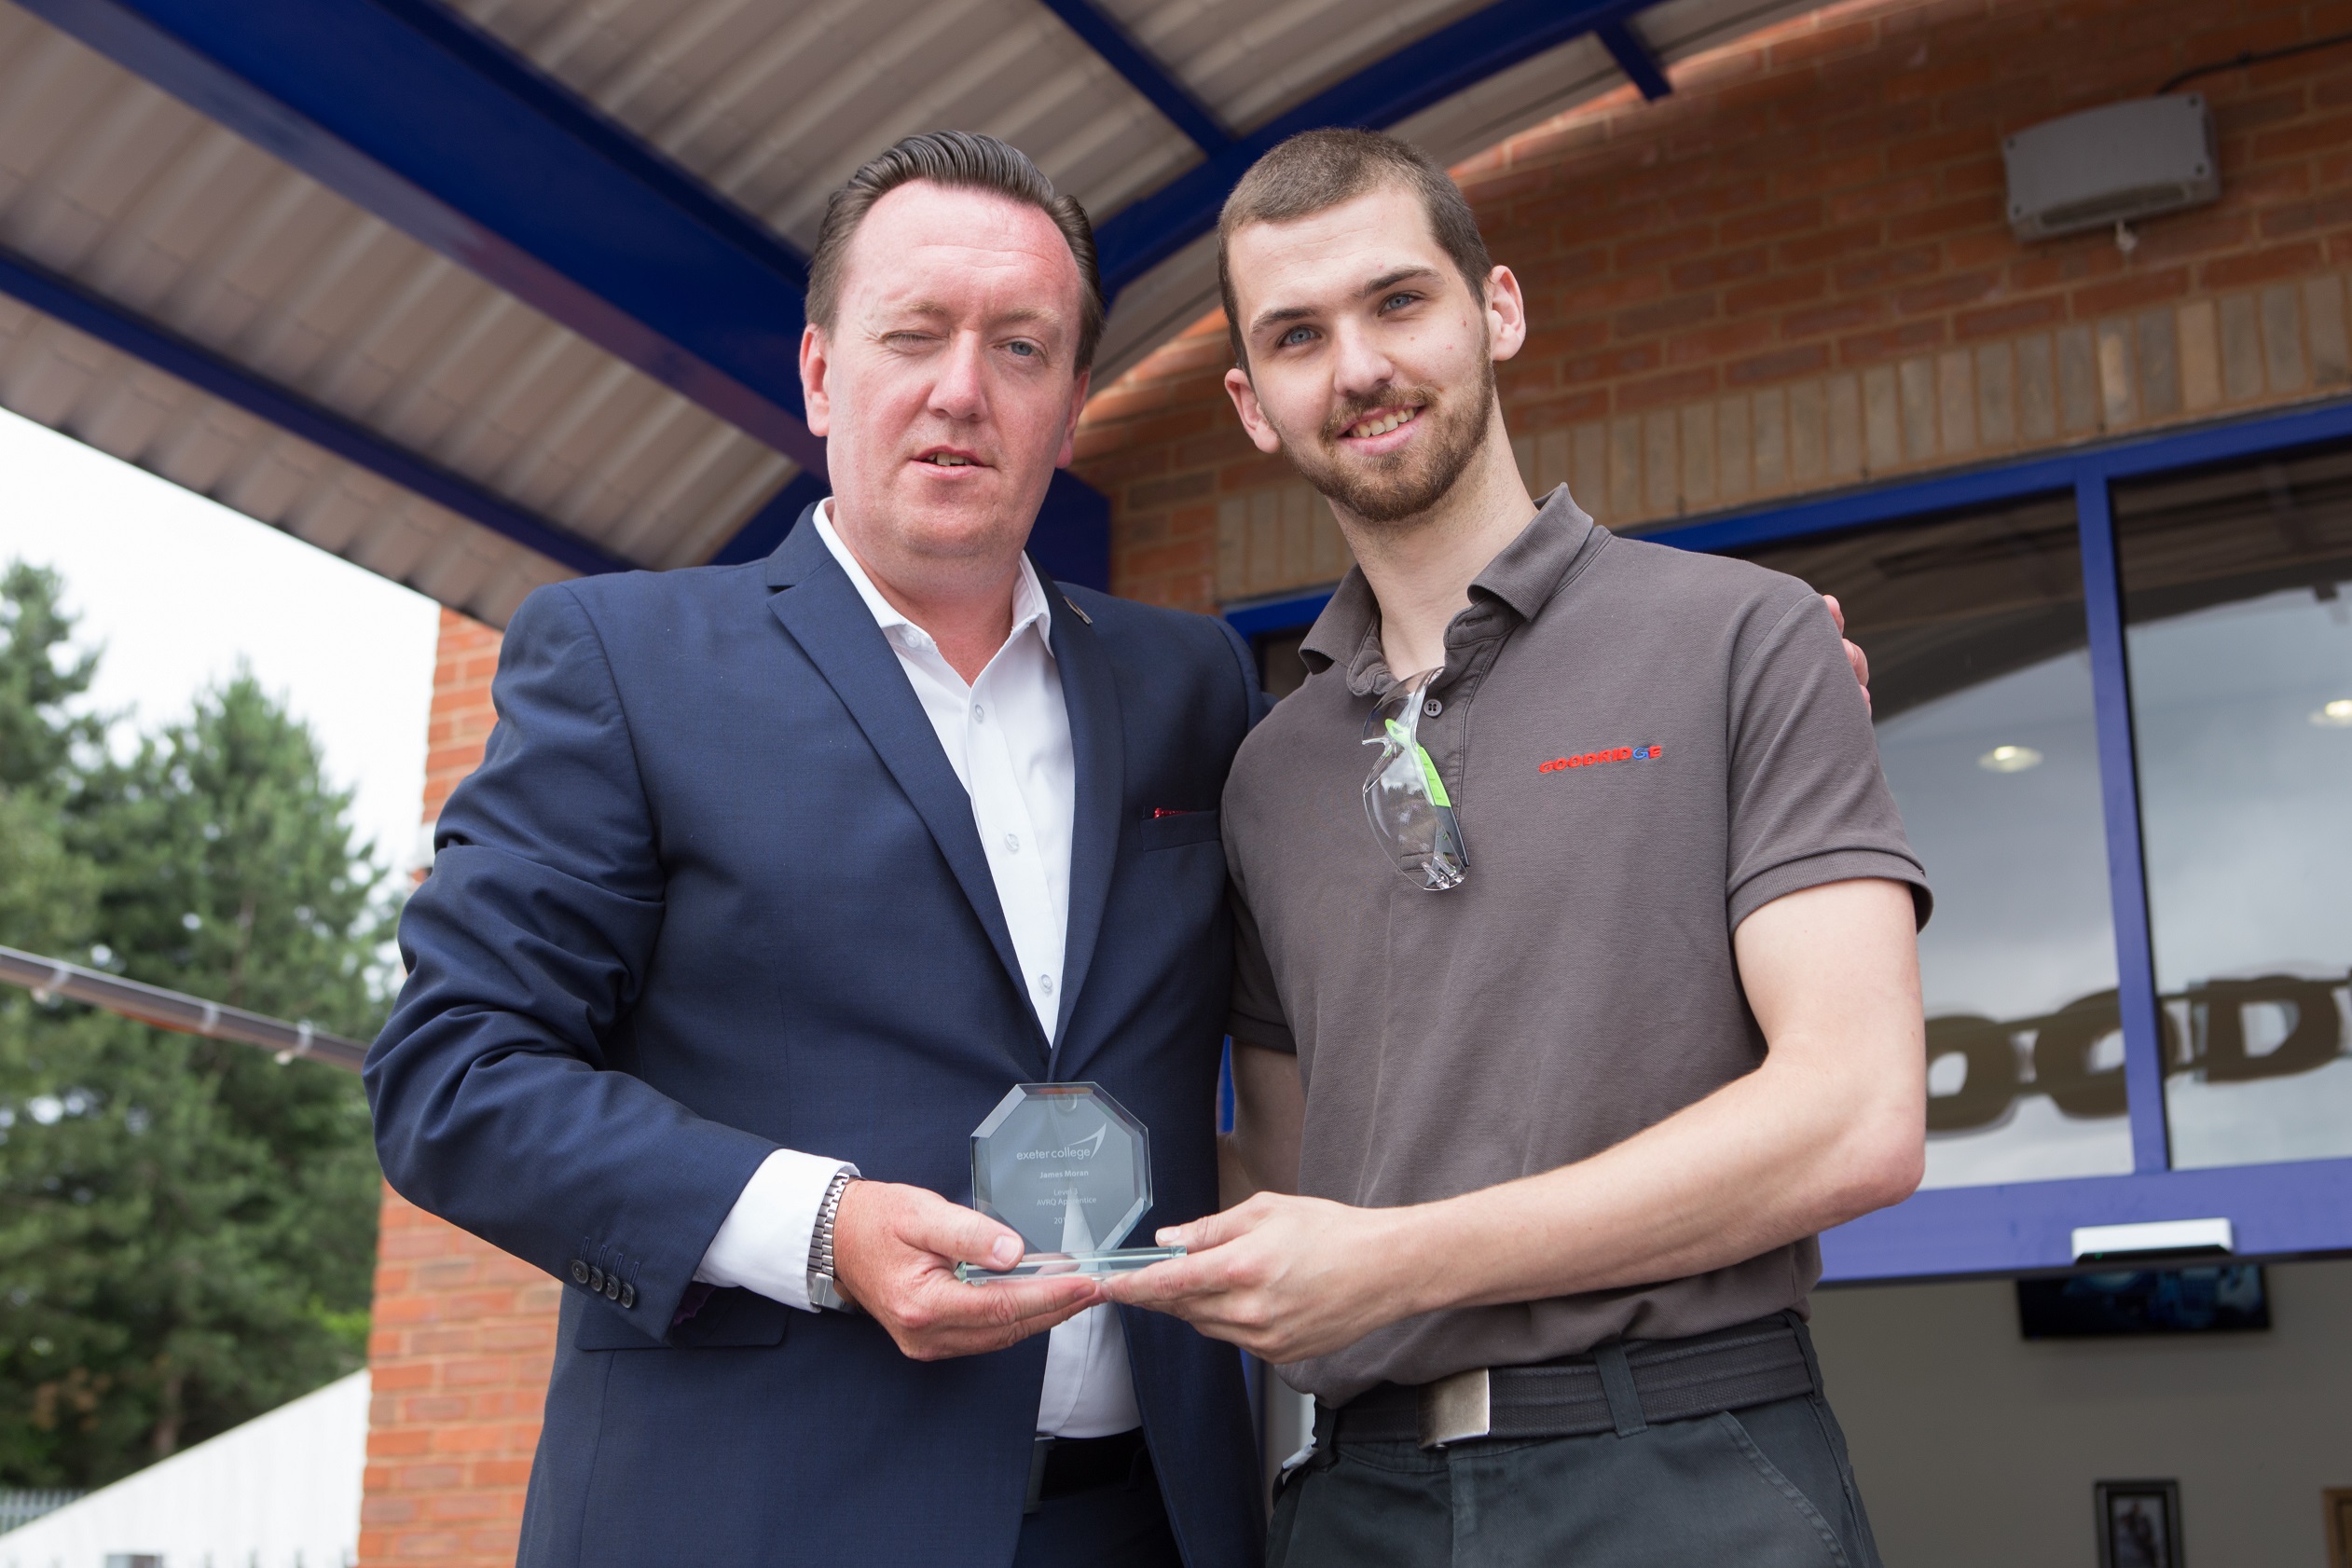 Junior Engineer James Moran presented Exeter College Award